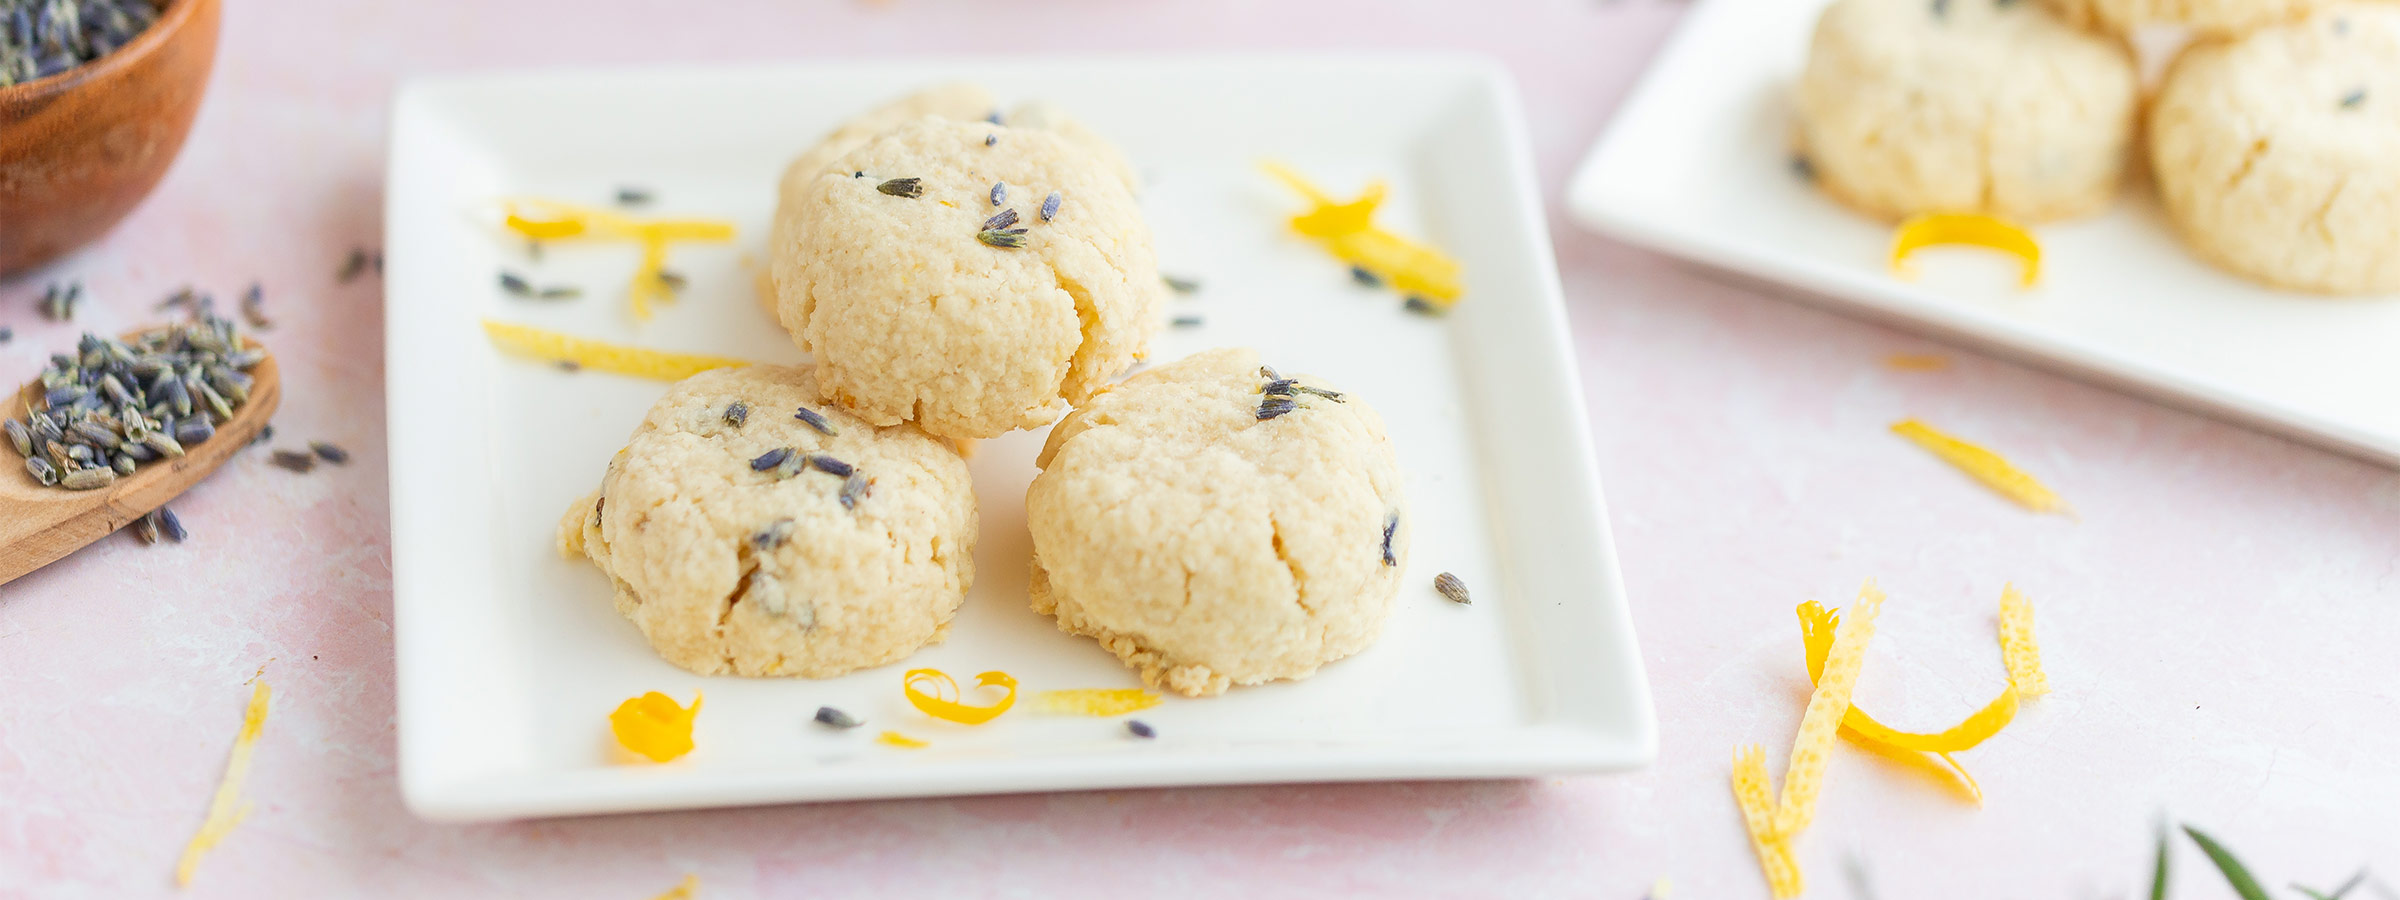 Lemon Lavender Shortbread Cookies on a white plate sprinkled with lavender flowers and Lemon peels